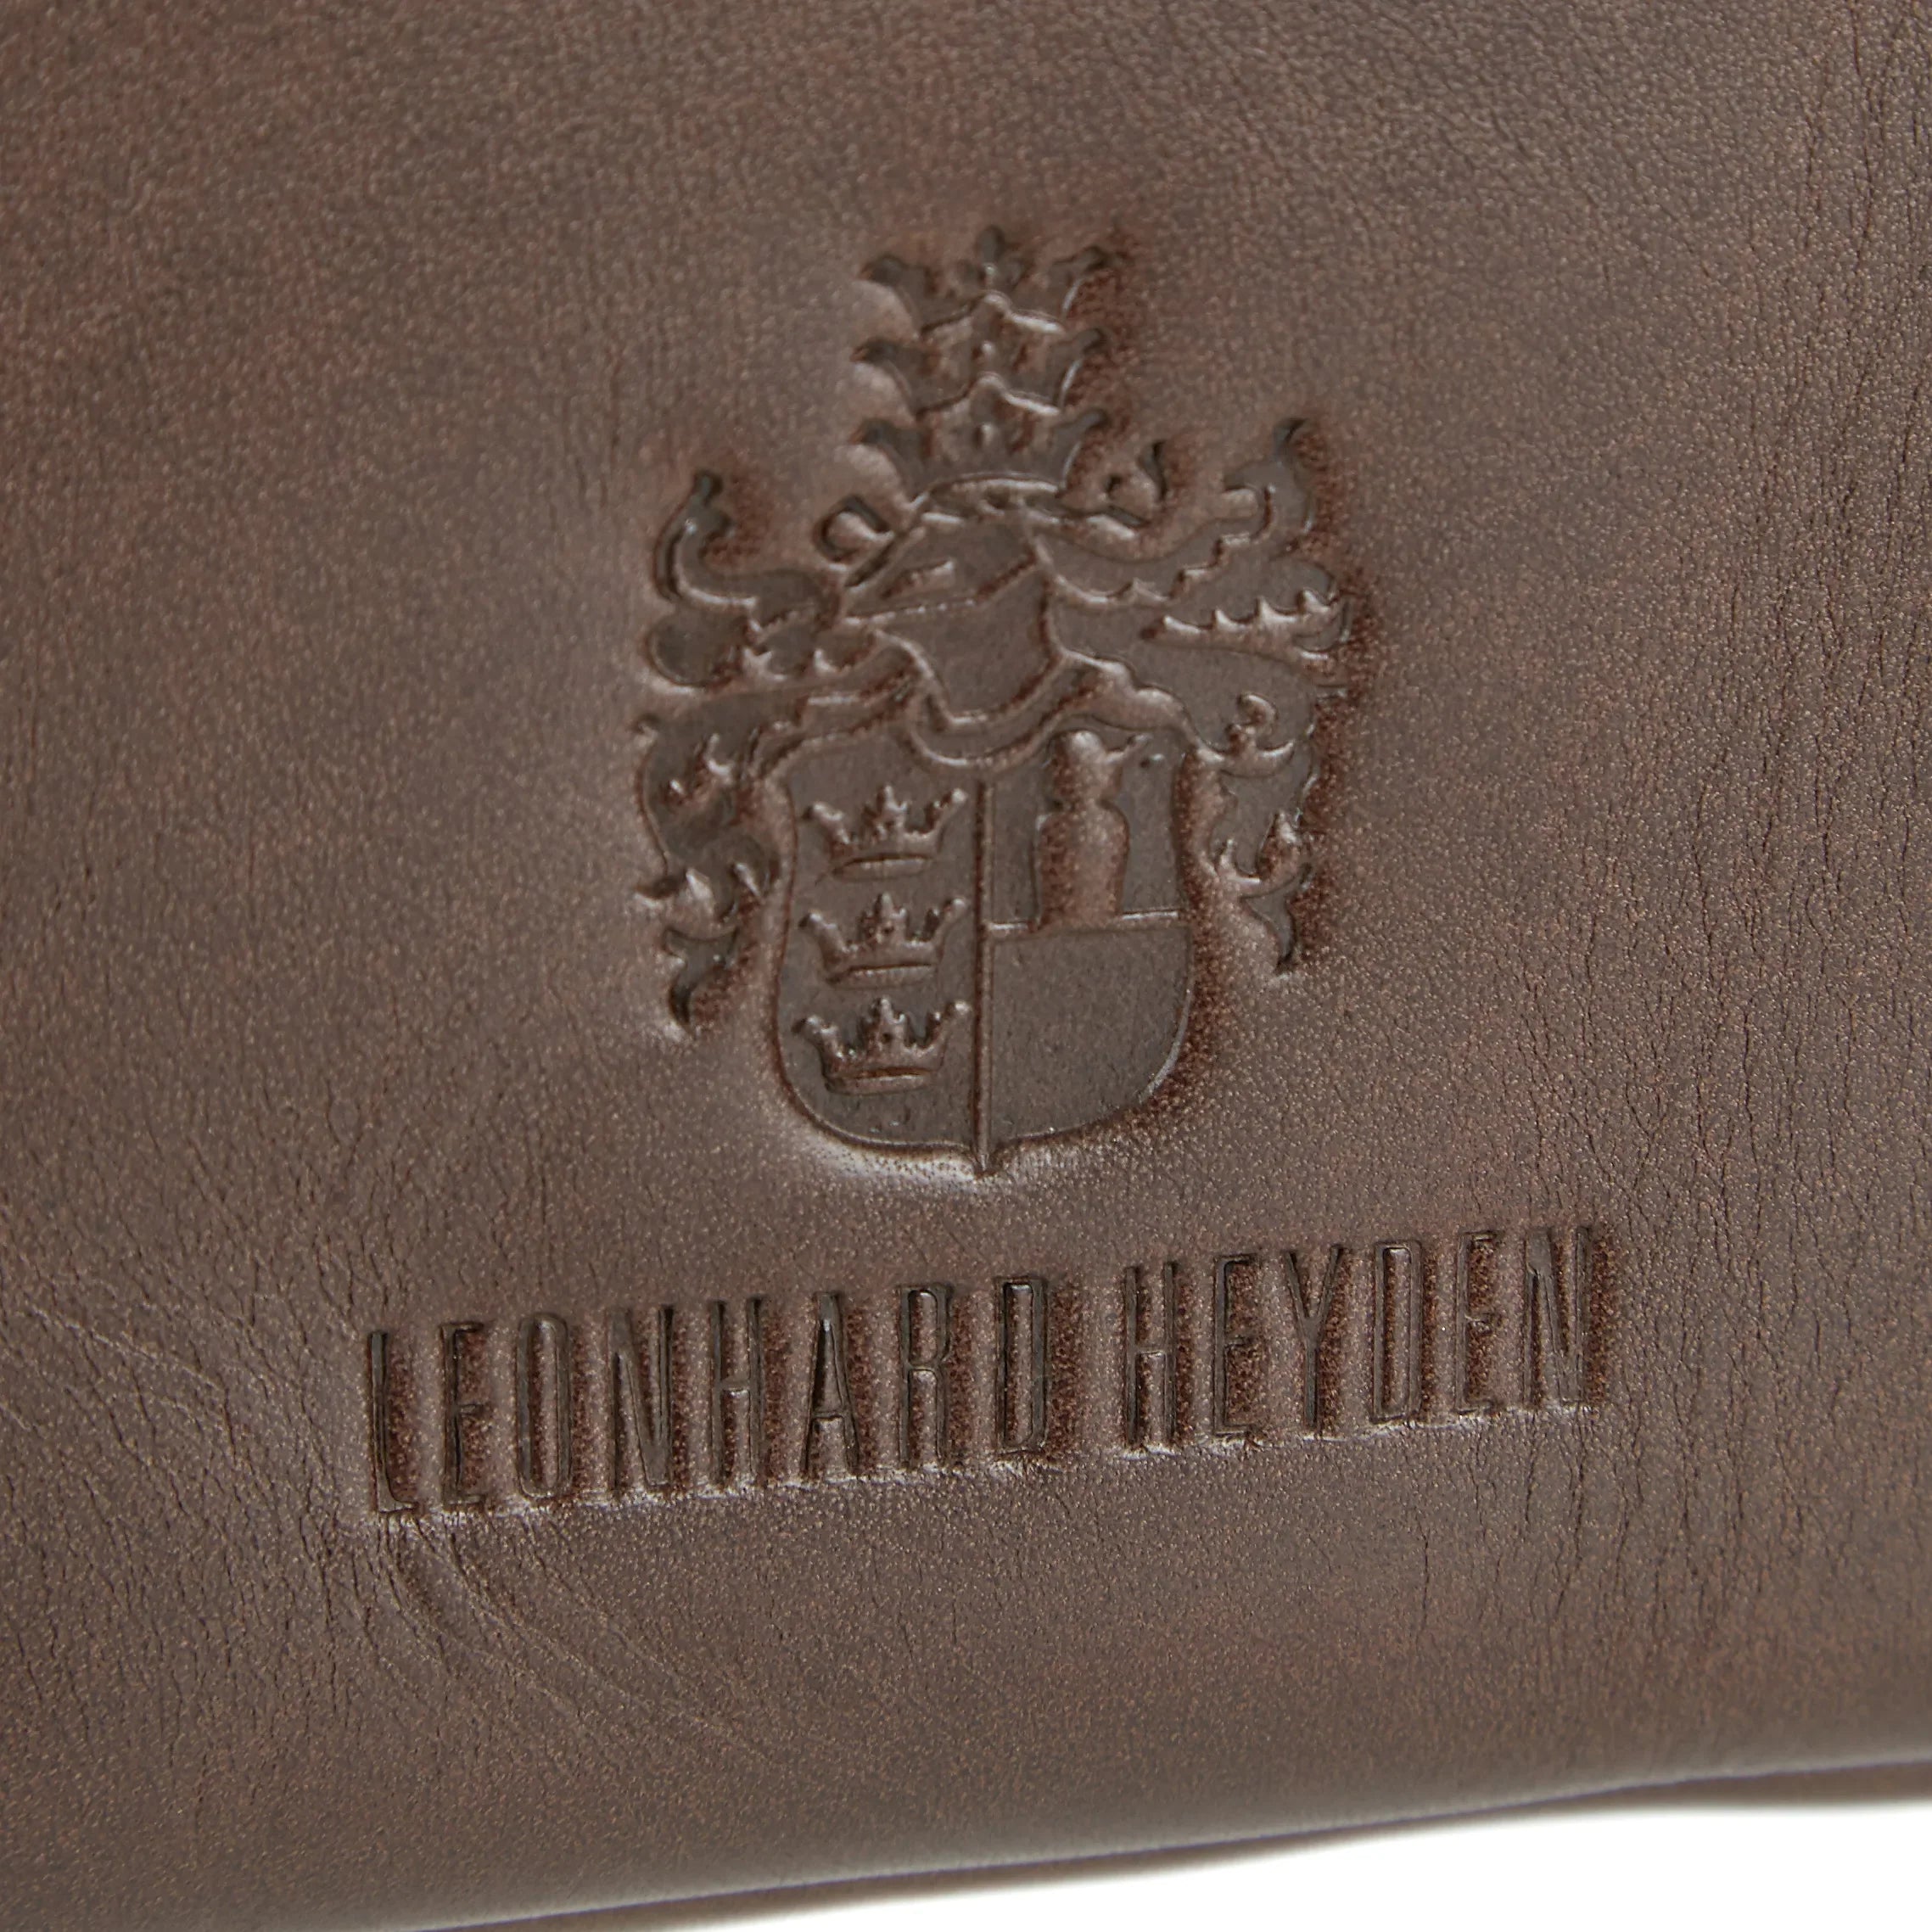 Leonhard Heyden Richmond shoulder bag 26 cm - cognac